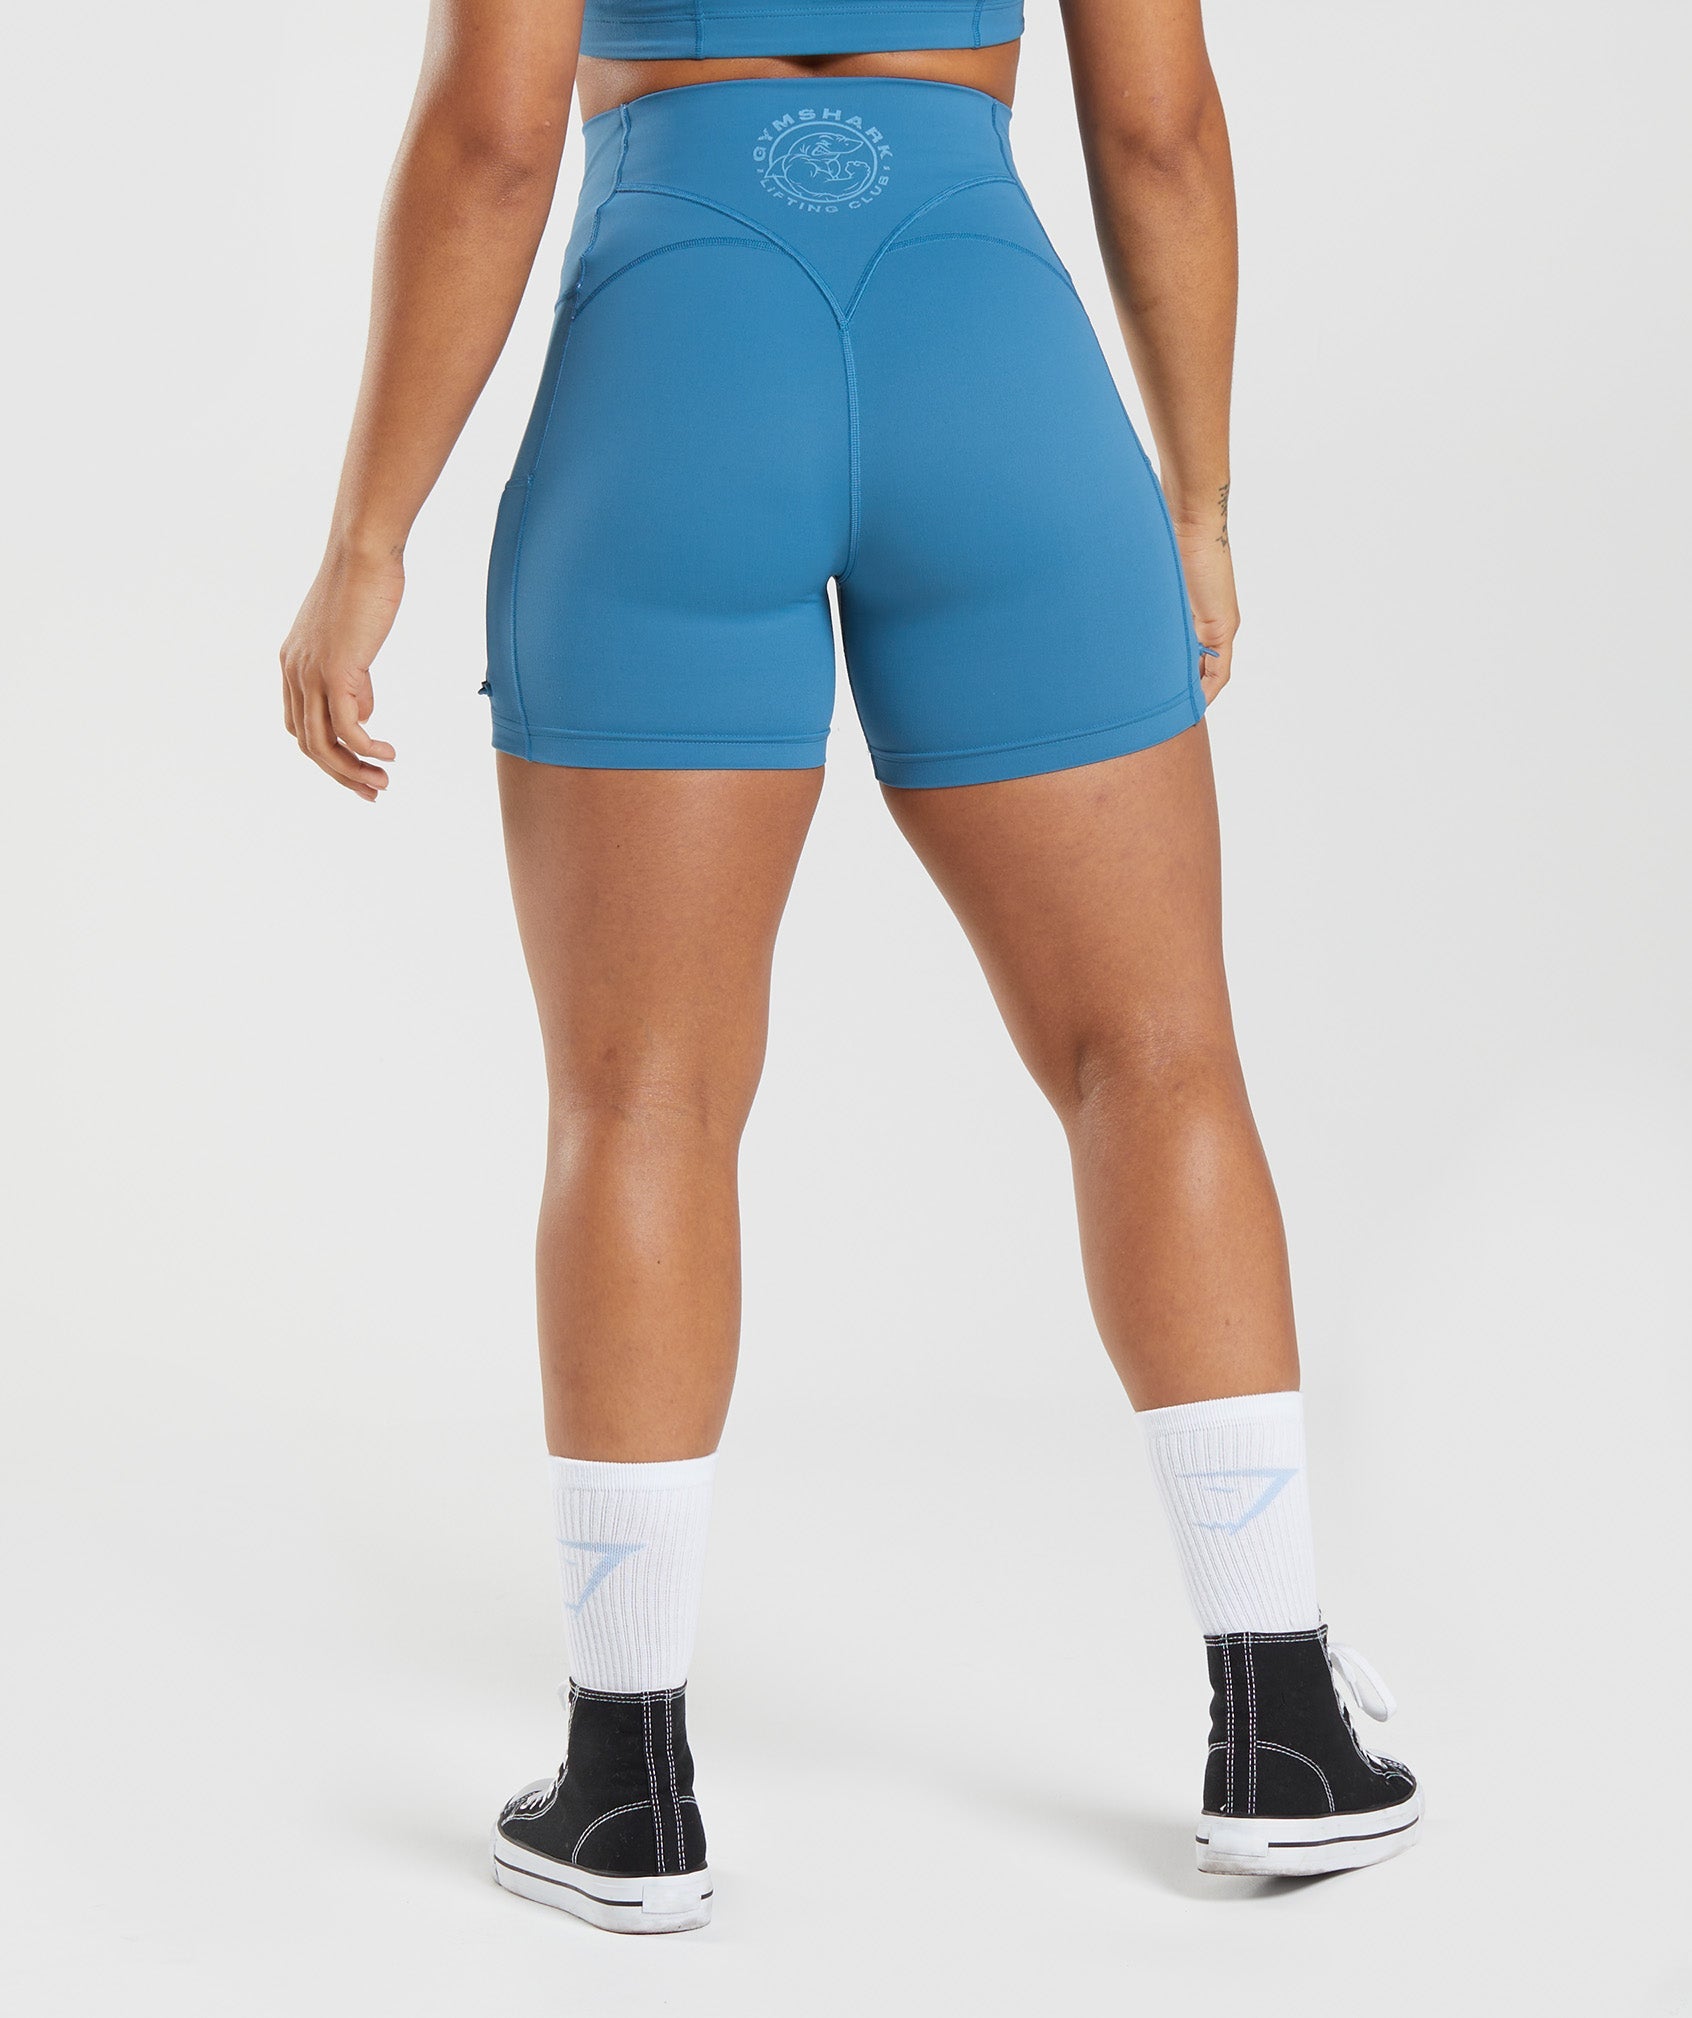 Shorts gymshark mujer — Ropafitgt